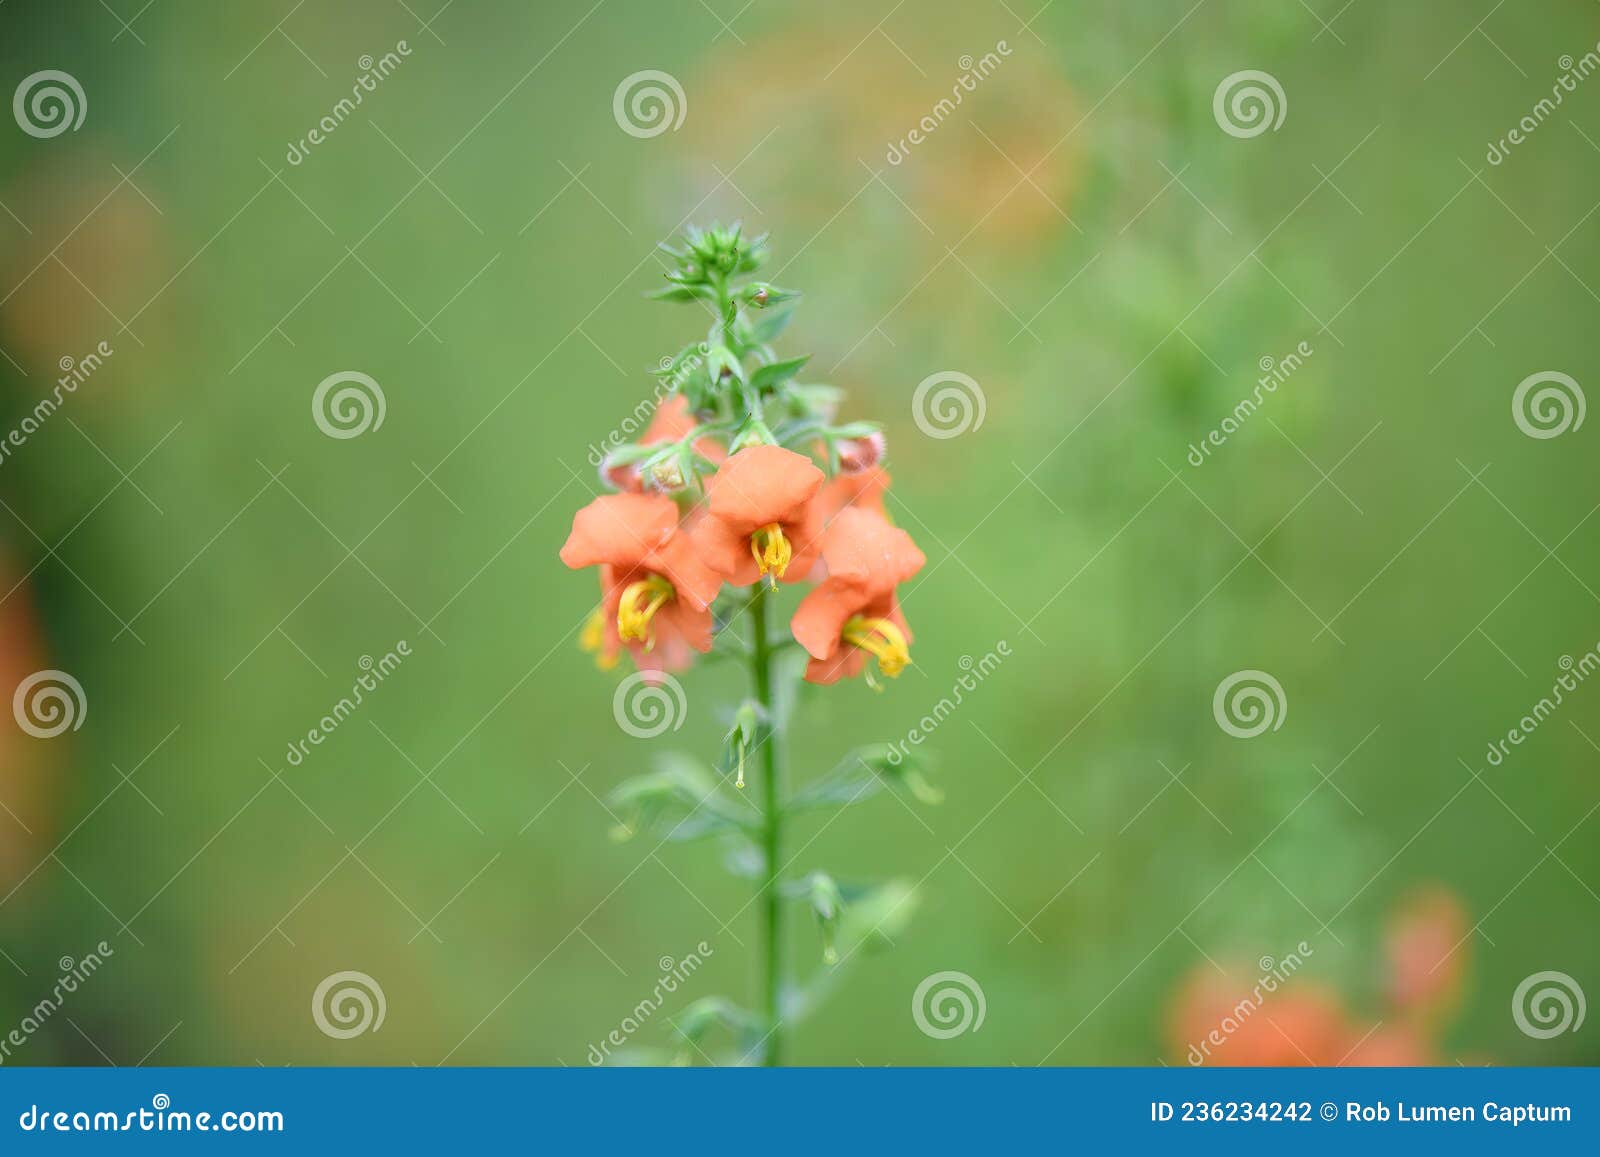 mask flower alonsoa meridionalis, orange flower with yellow stamen